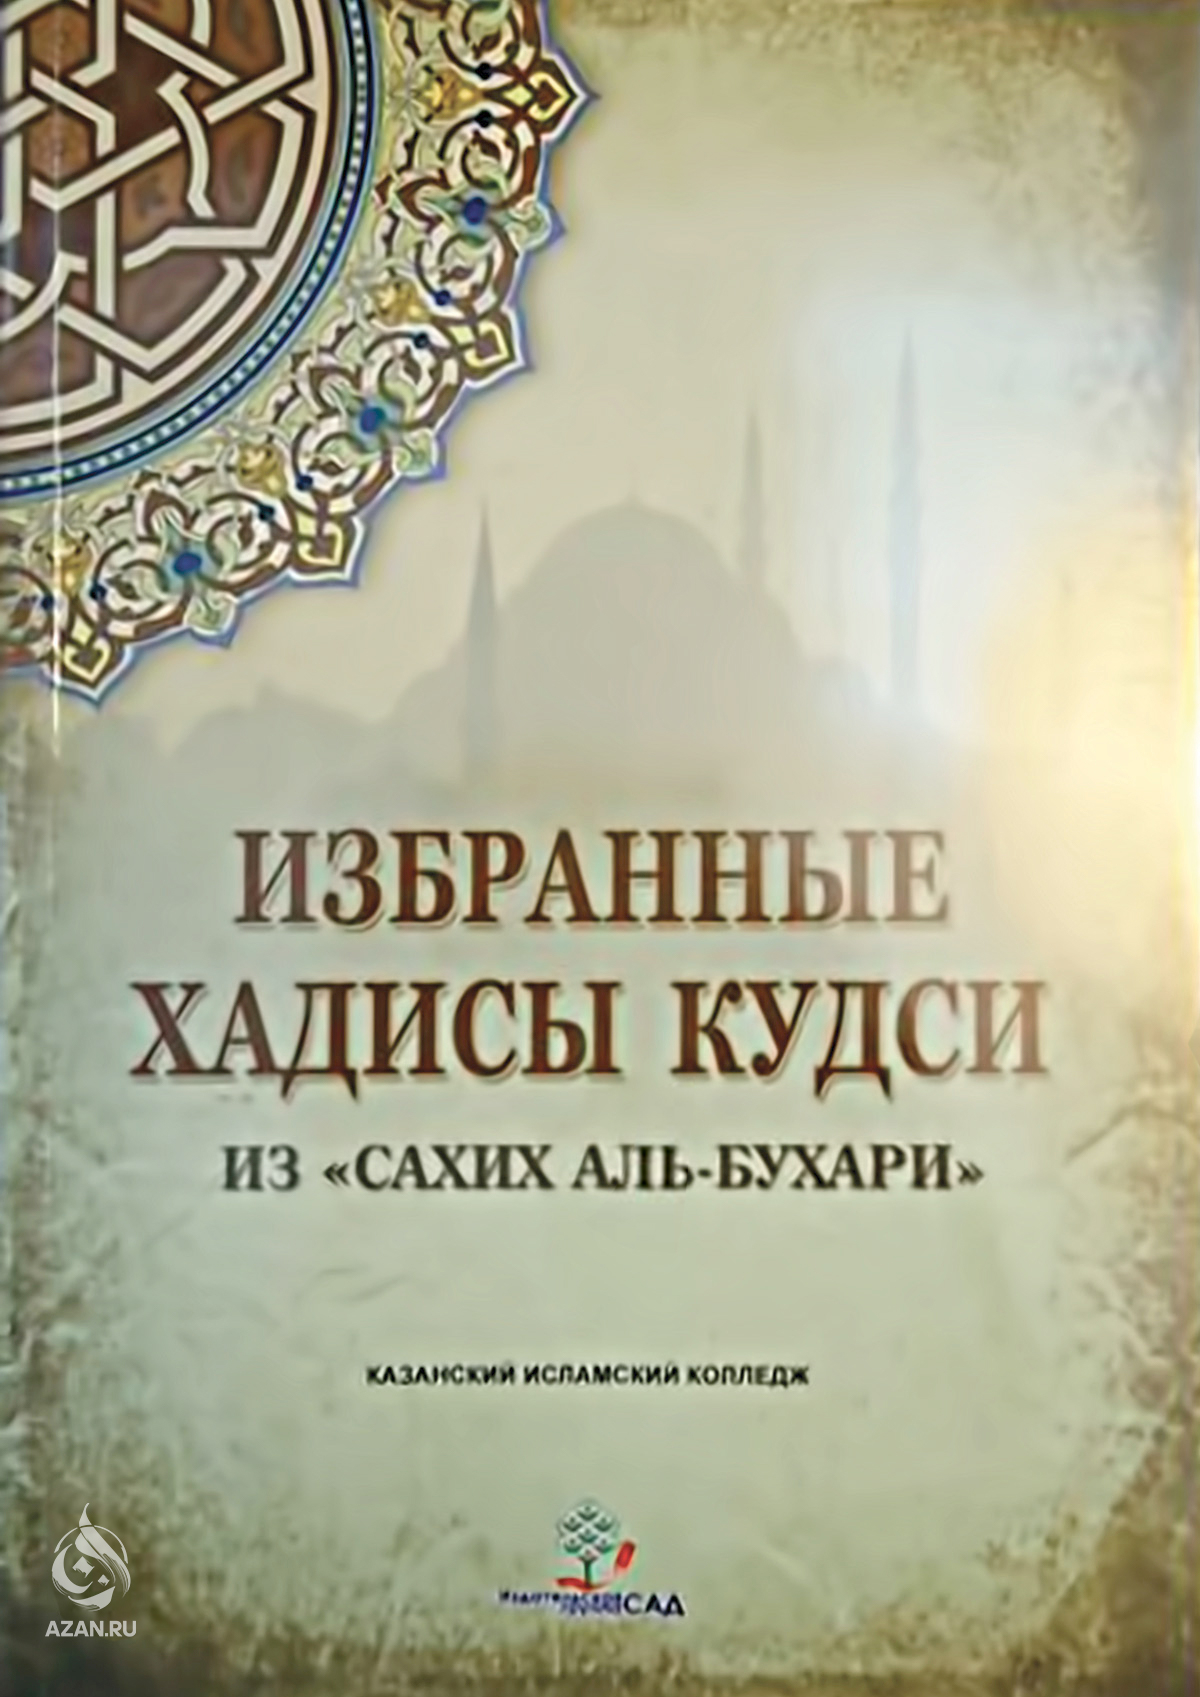 Книга хадисов Аль Бухари. Хадис Кудси Аль Бухари. Избранные хадисы Сахих Аль Бухари.